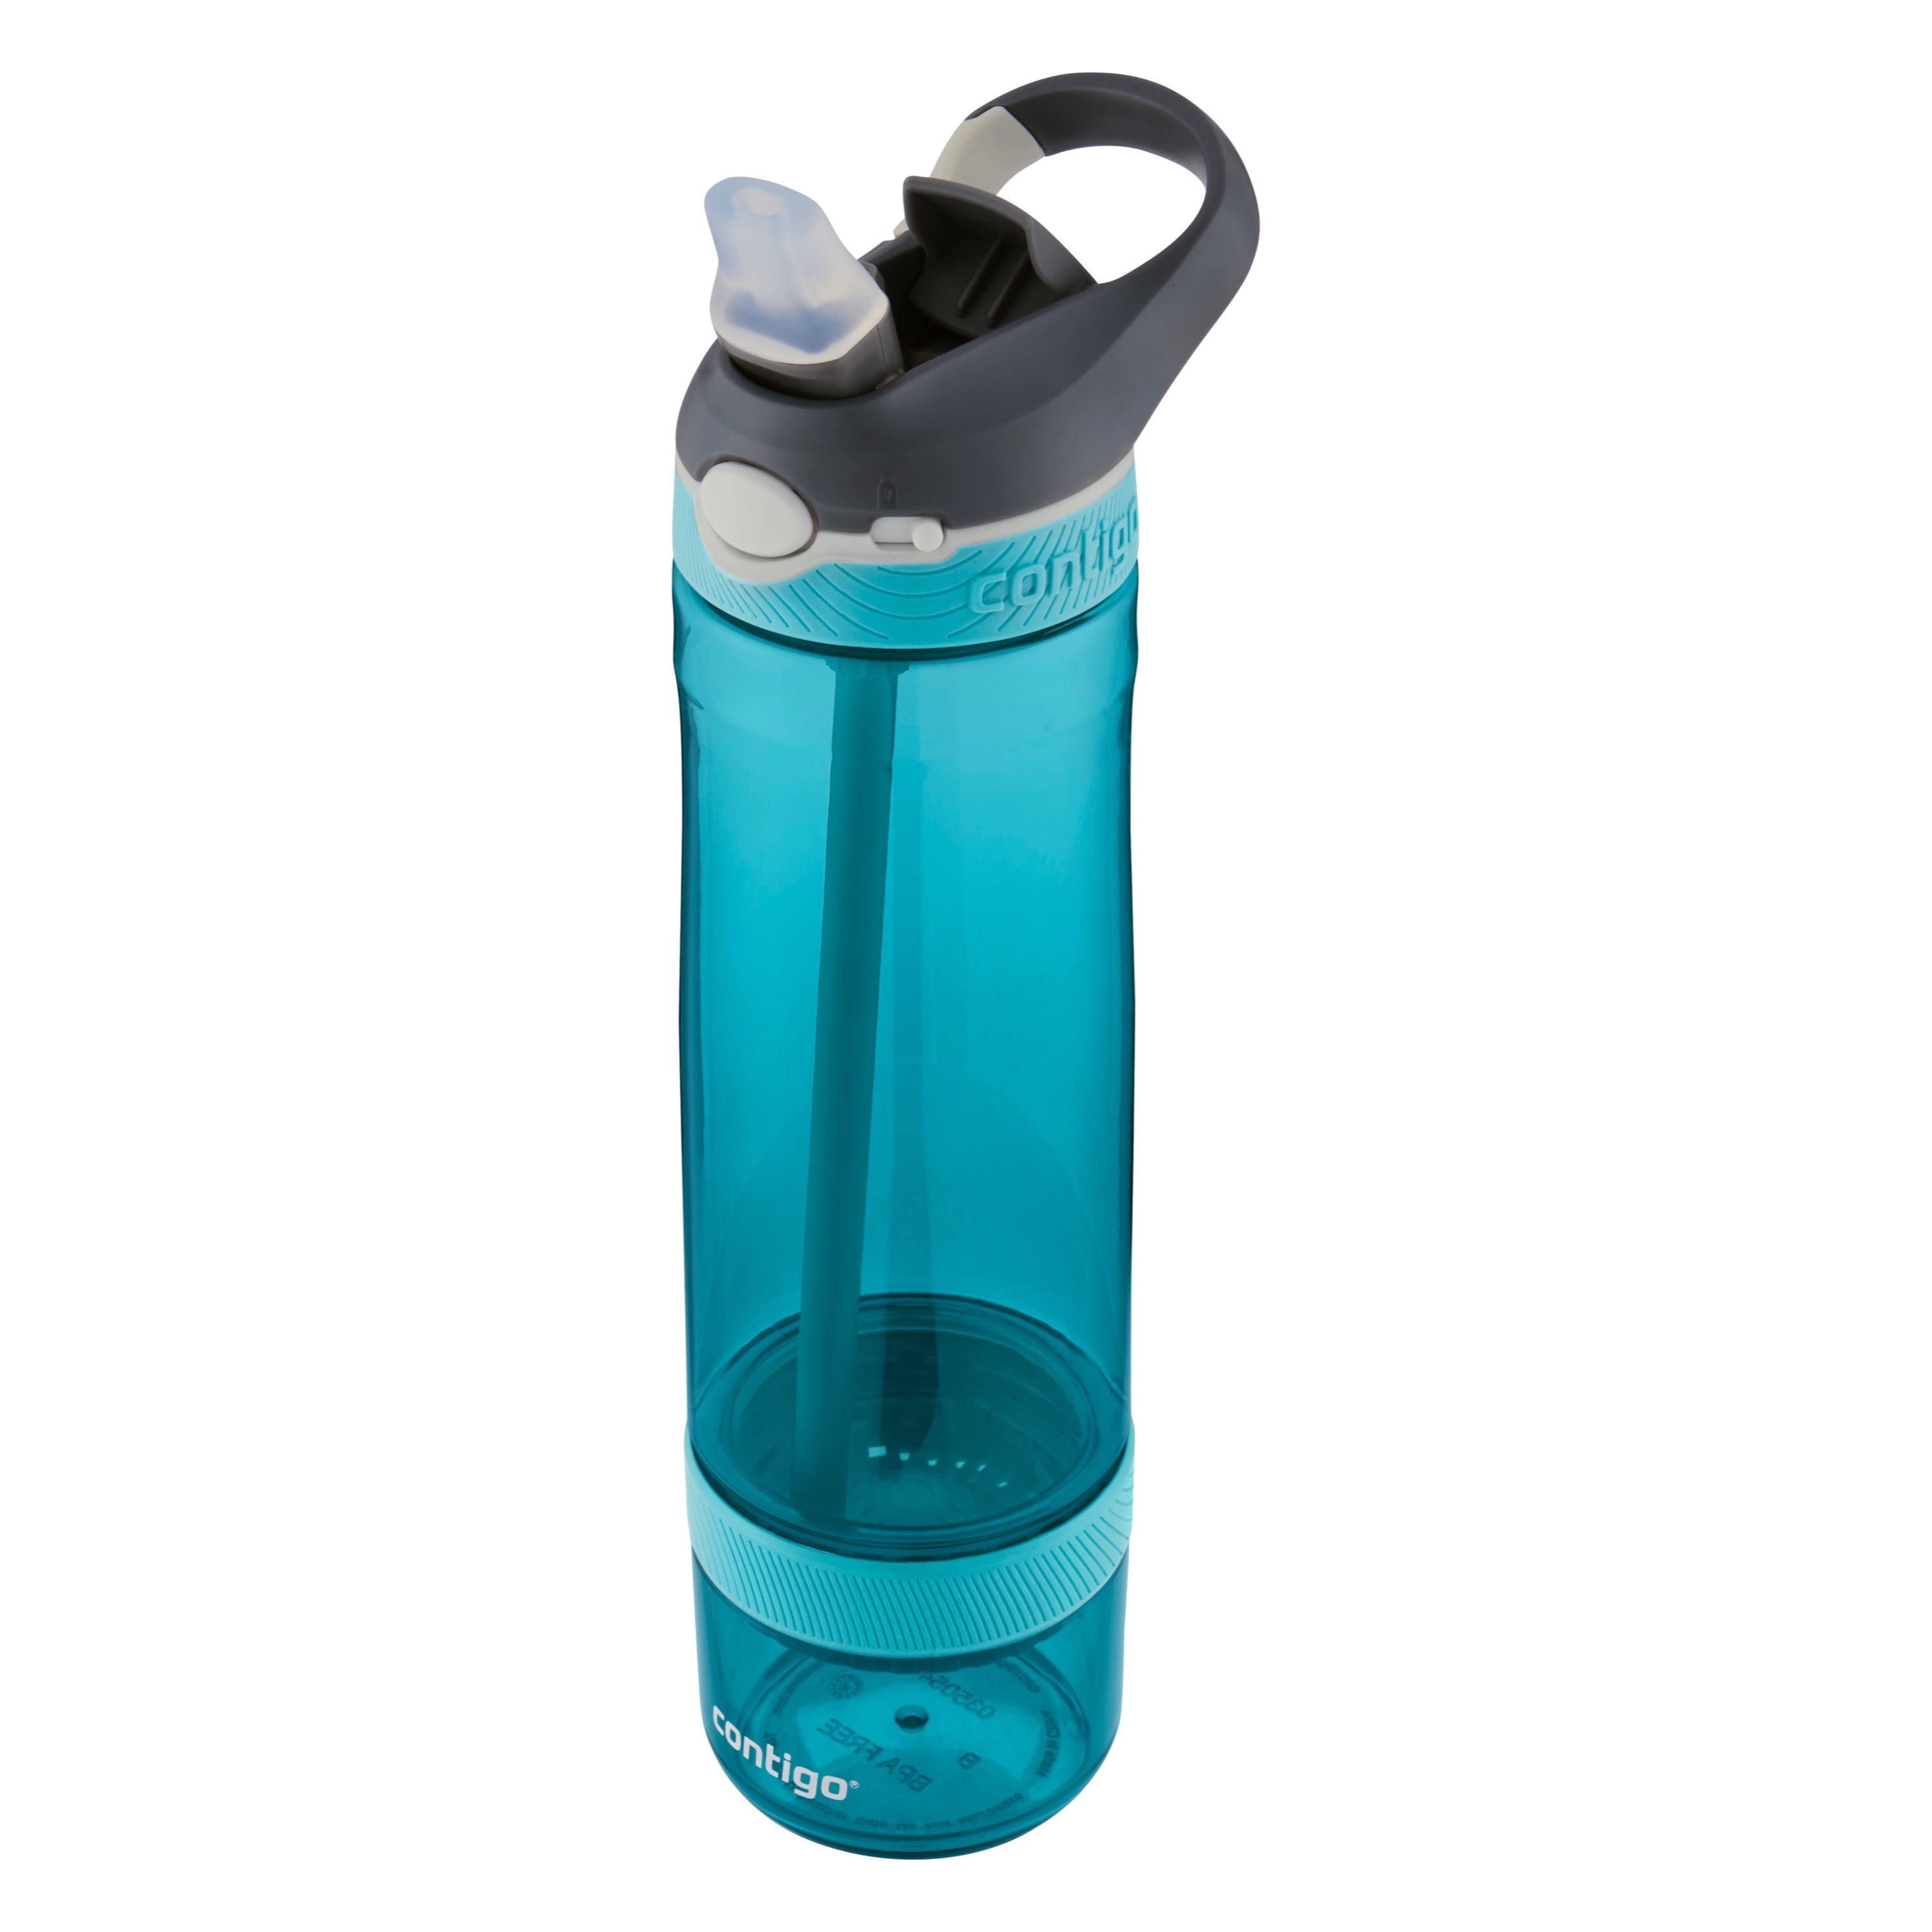 Contigo Water Bottle - Stethoscope: We Appreciate You – Baudville